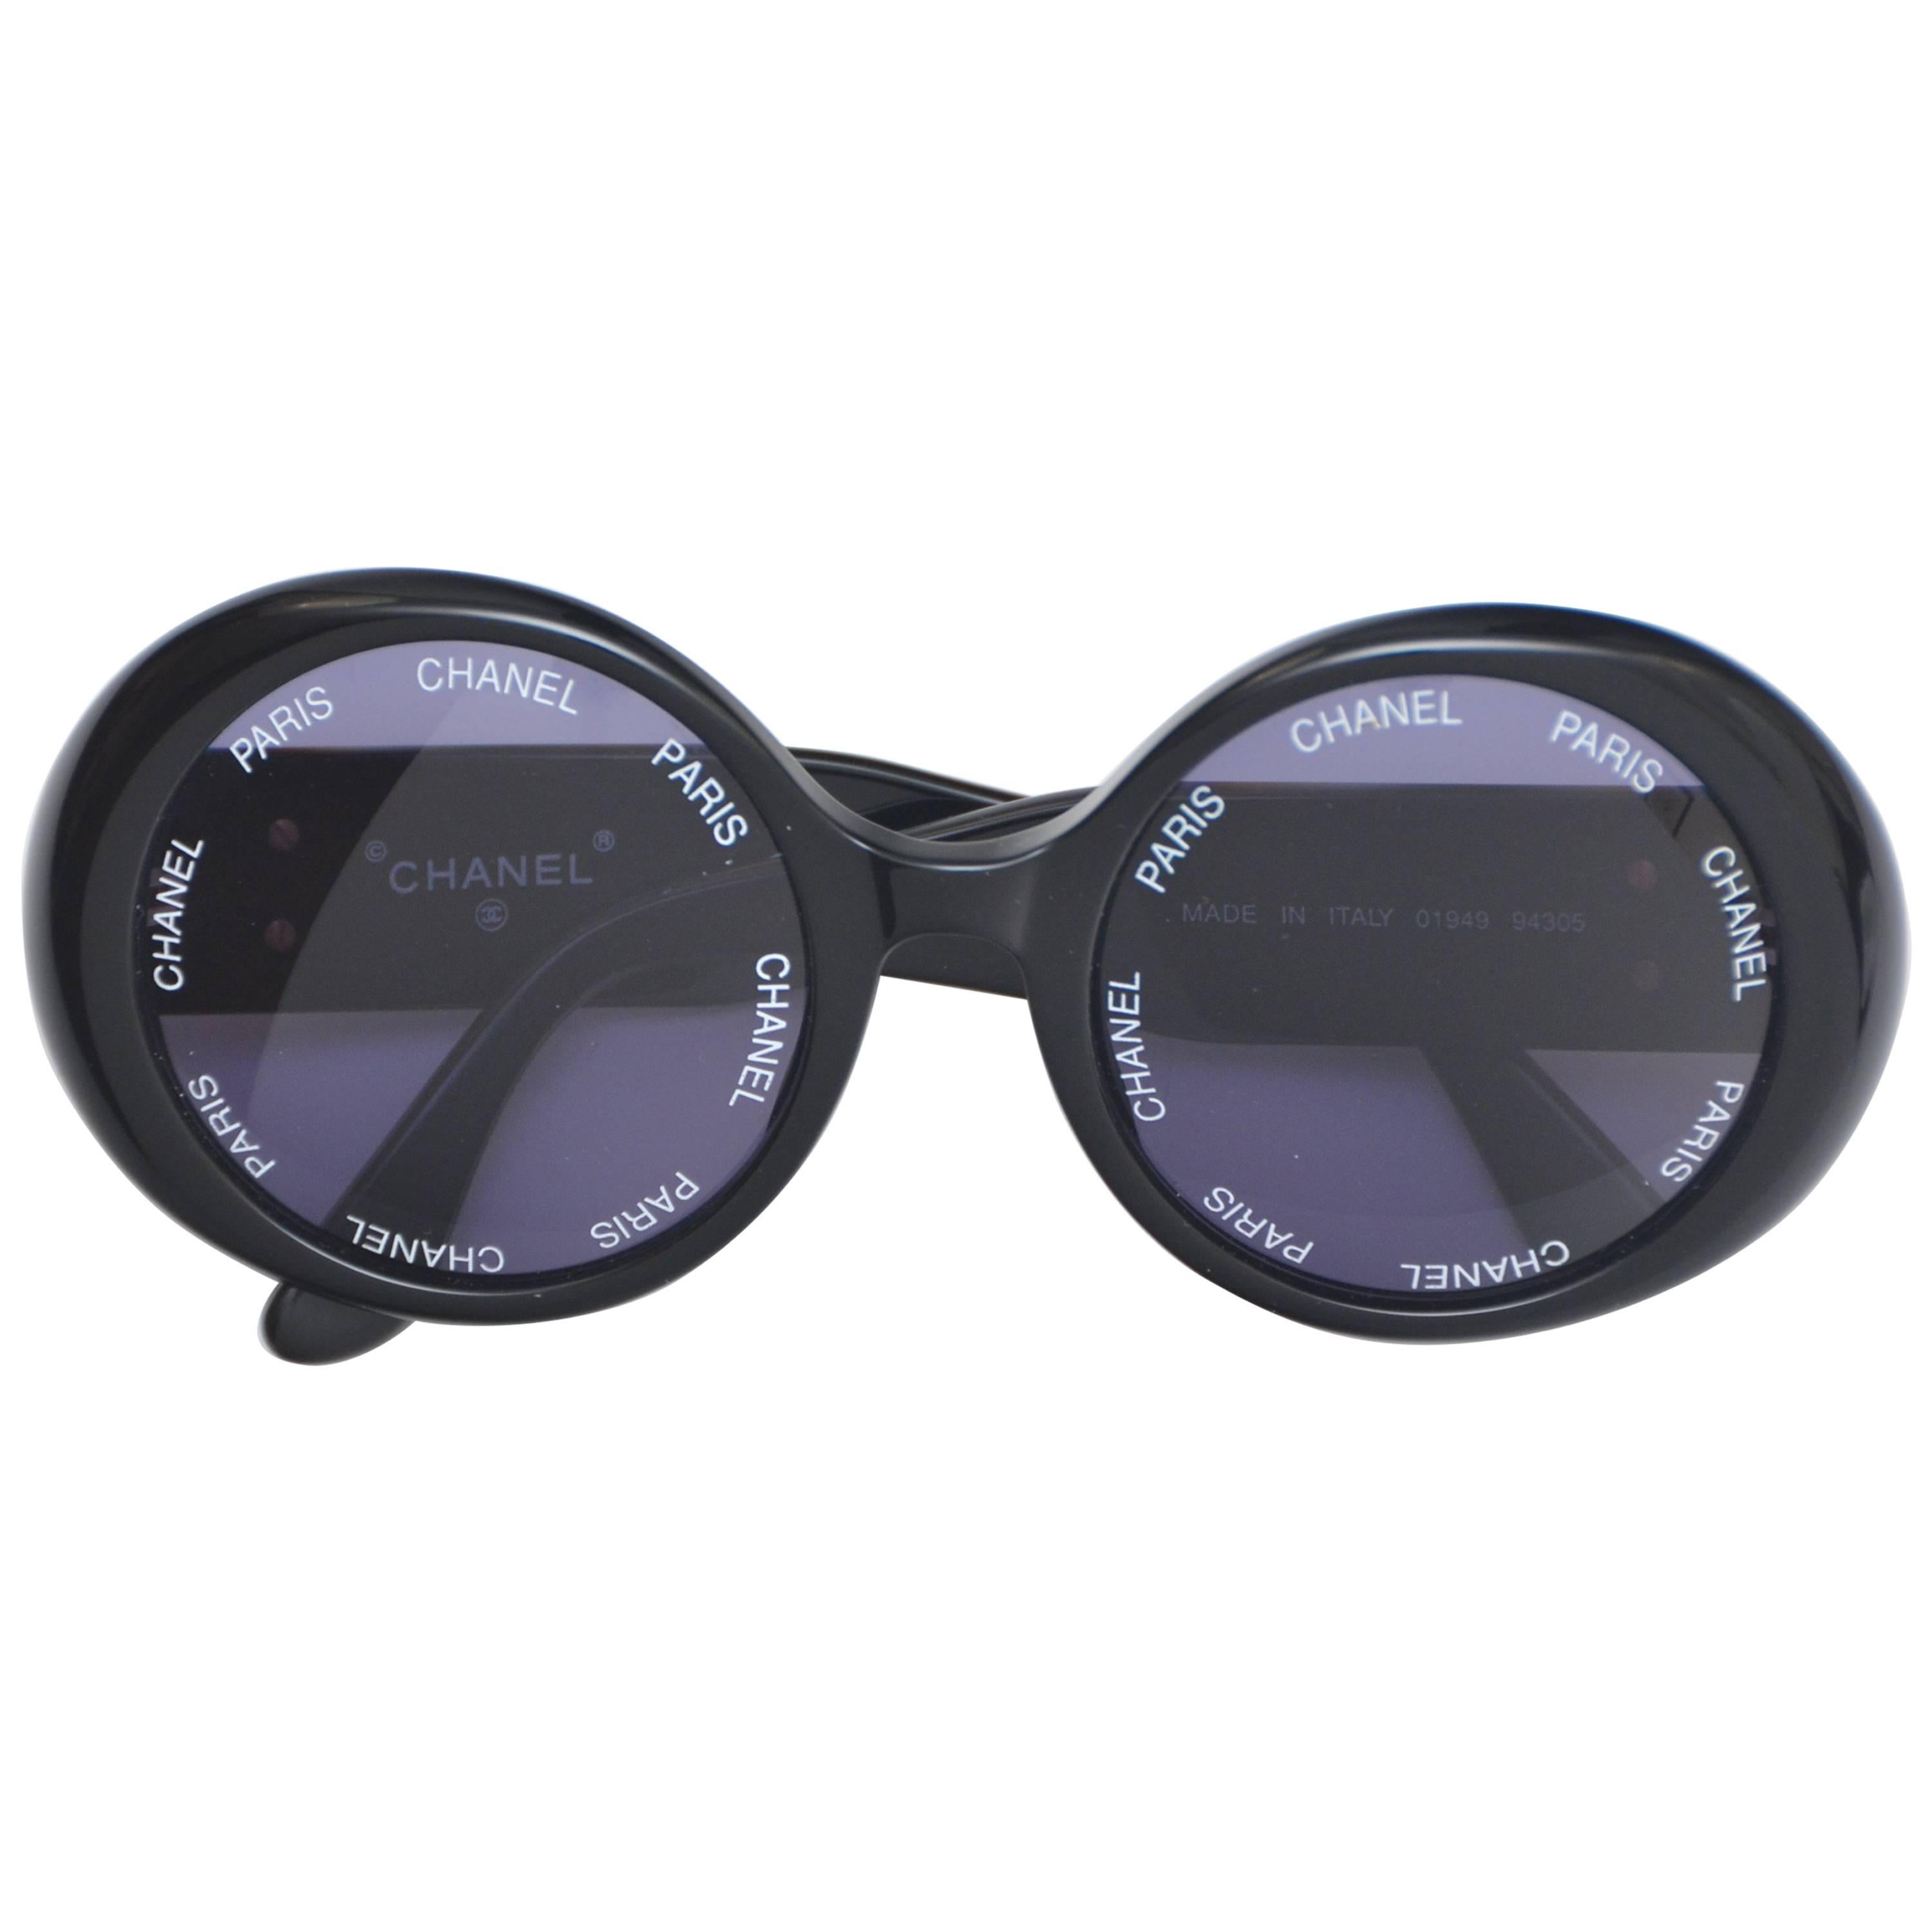 Chanel Vintage Rare "CHANEL PARIS" Sunglasses As Seen On Rihana MINT